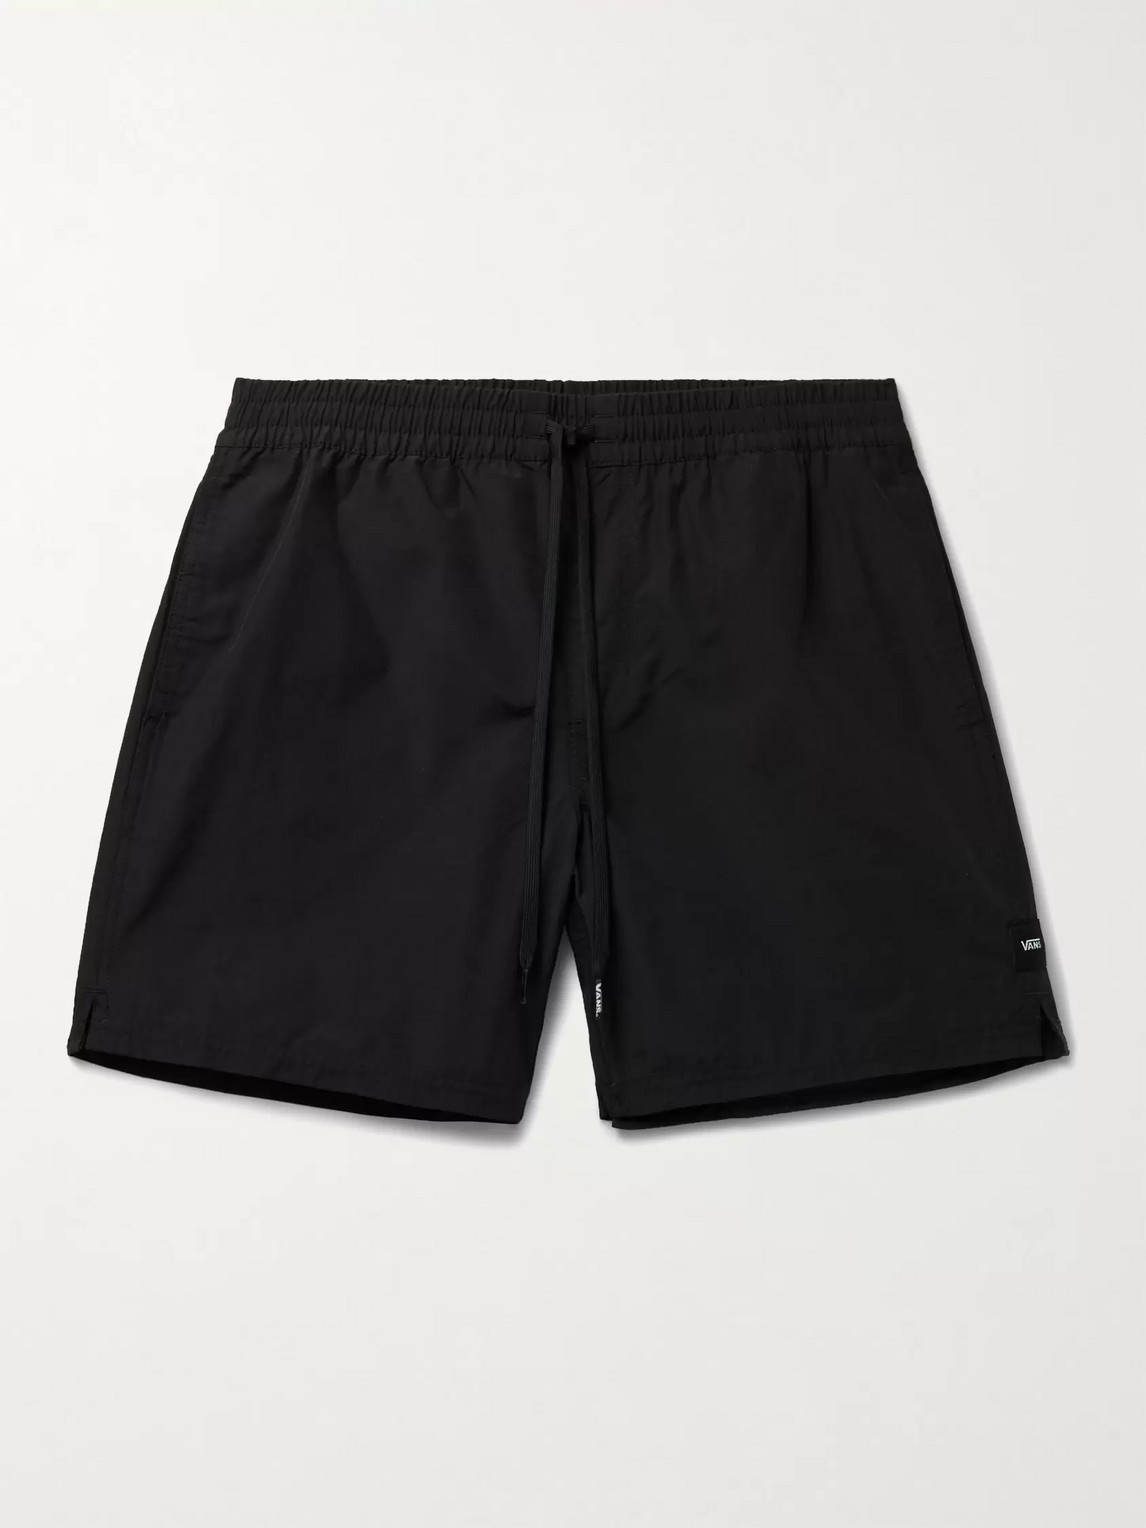 vans nylon active shorts